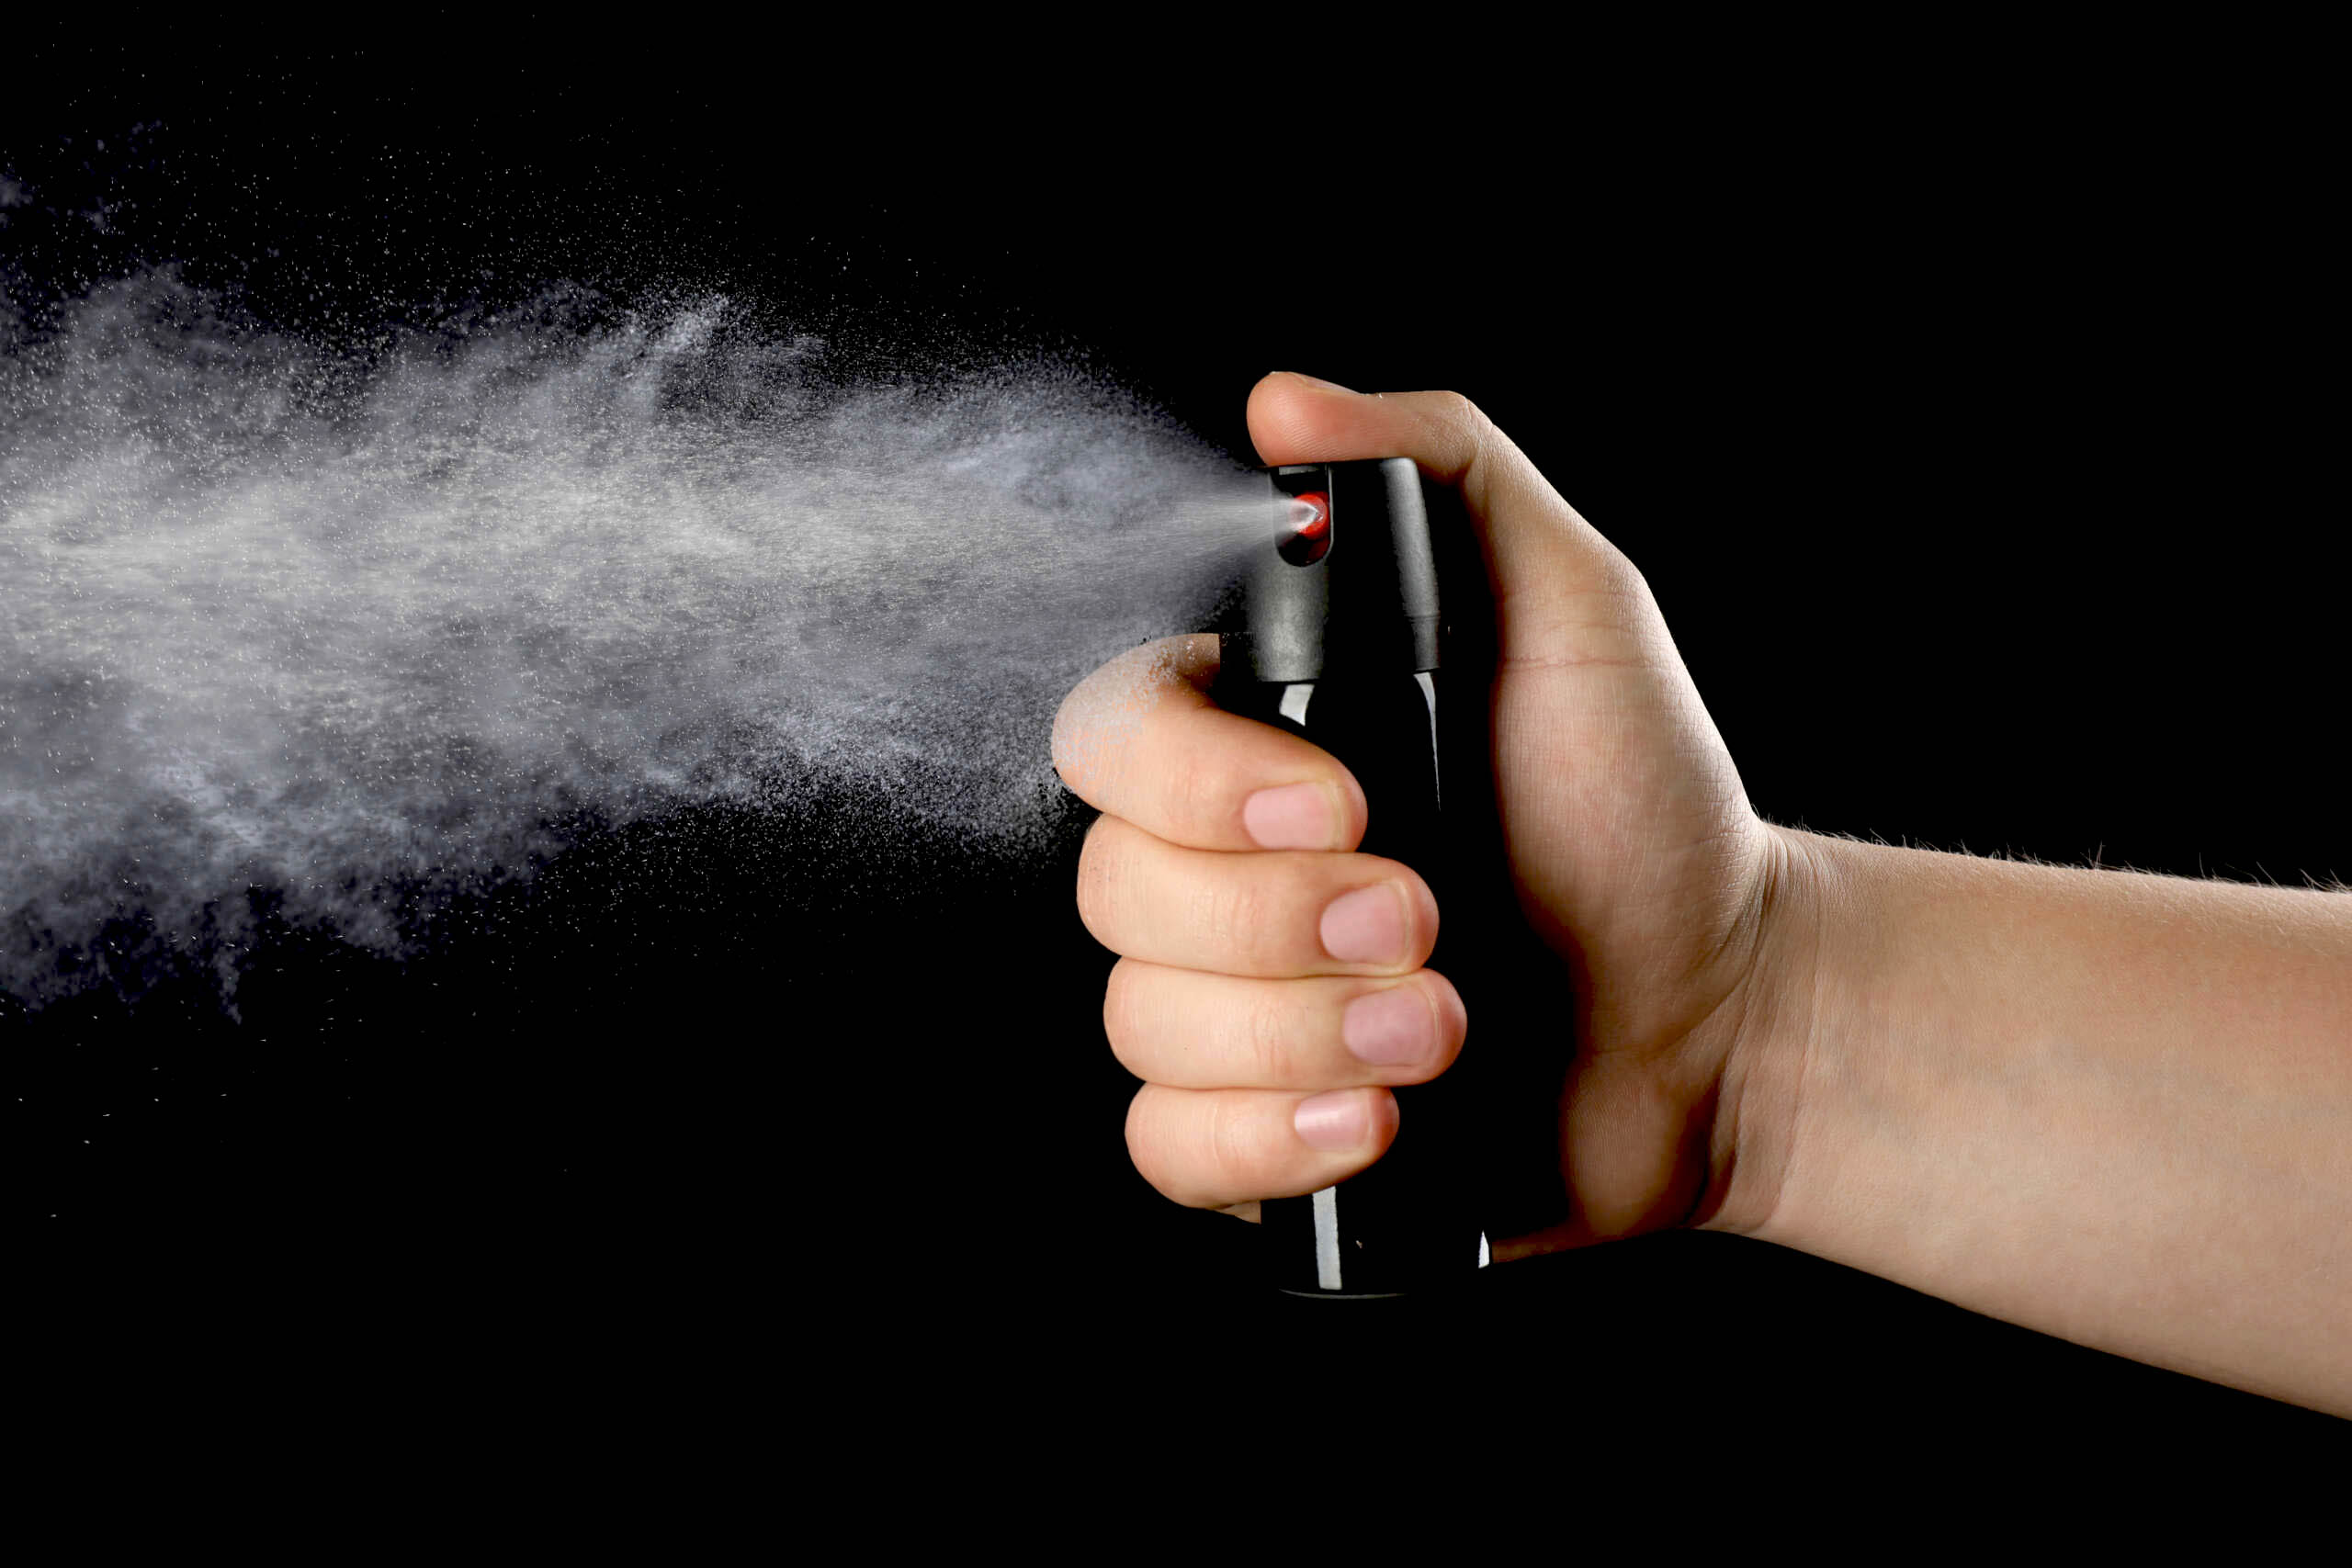 How To Stop Pepper Spray Burn On Skin